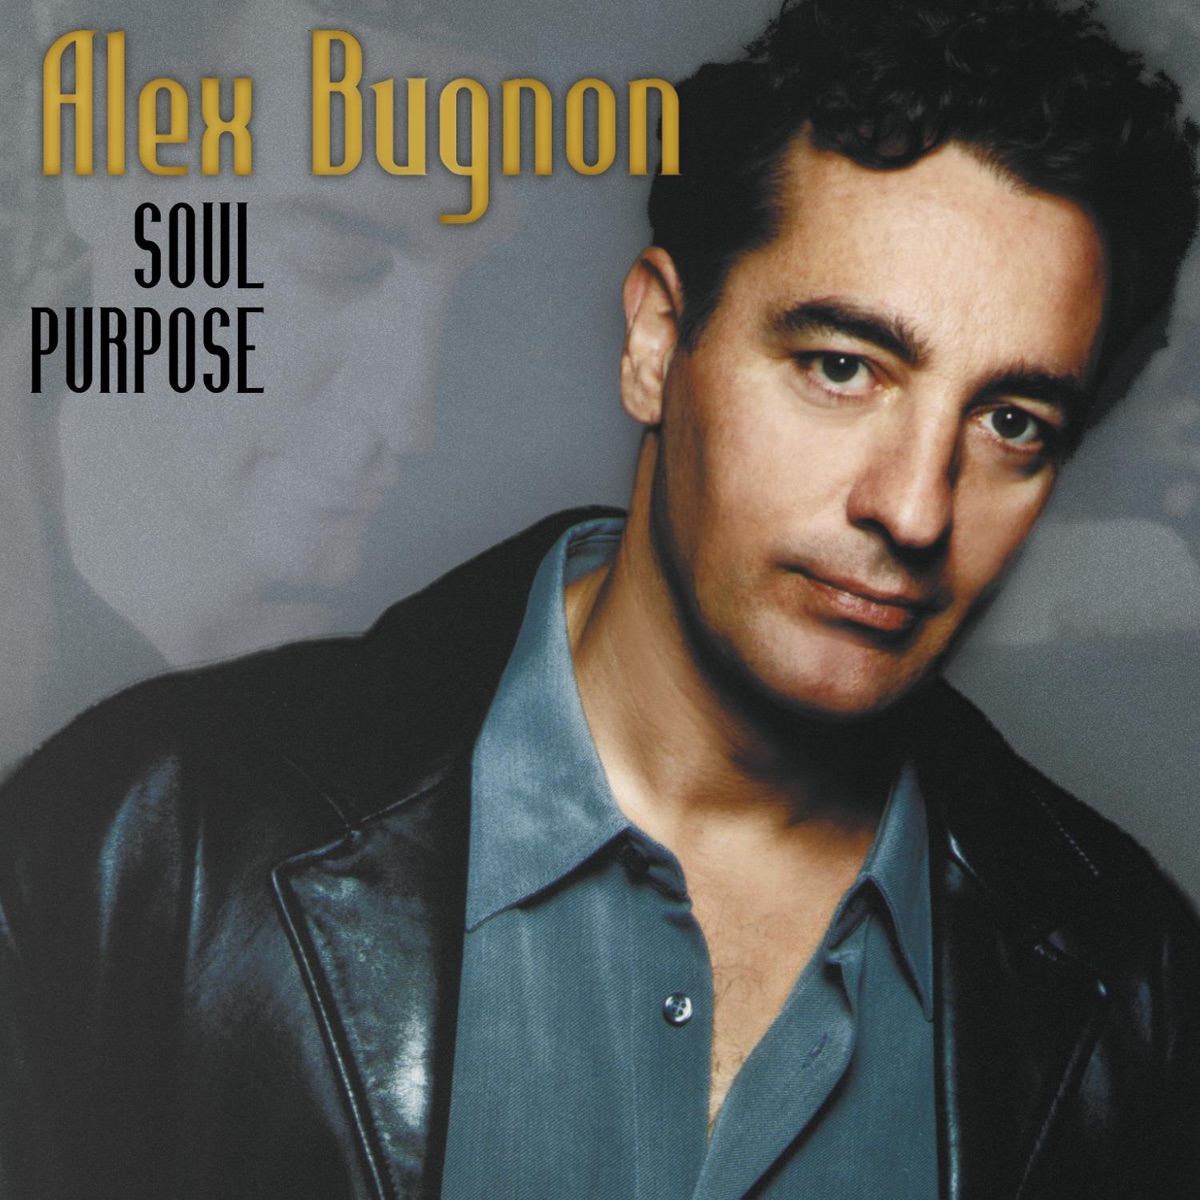 Soul Purpose - Album by Alex Bugnon - Apple Music